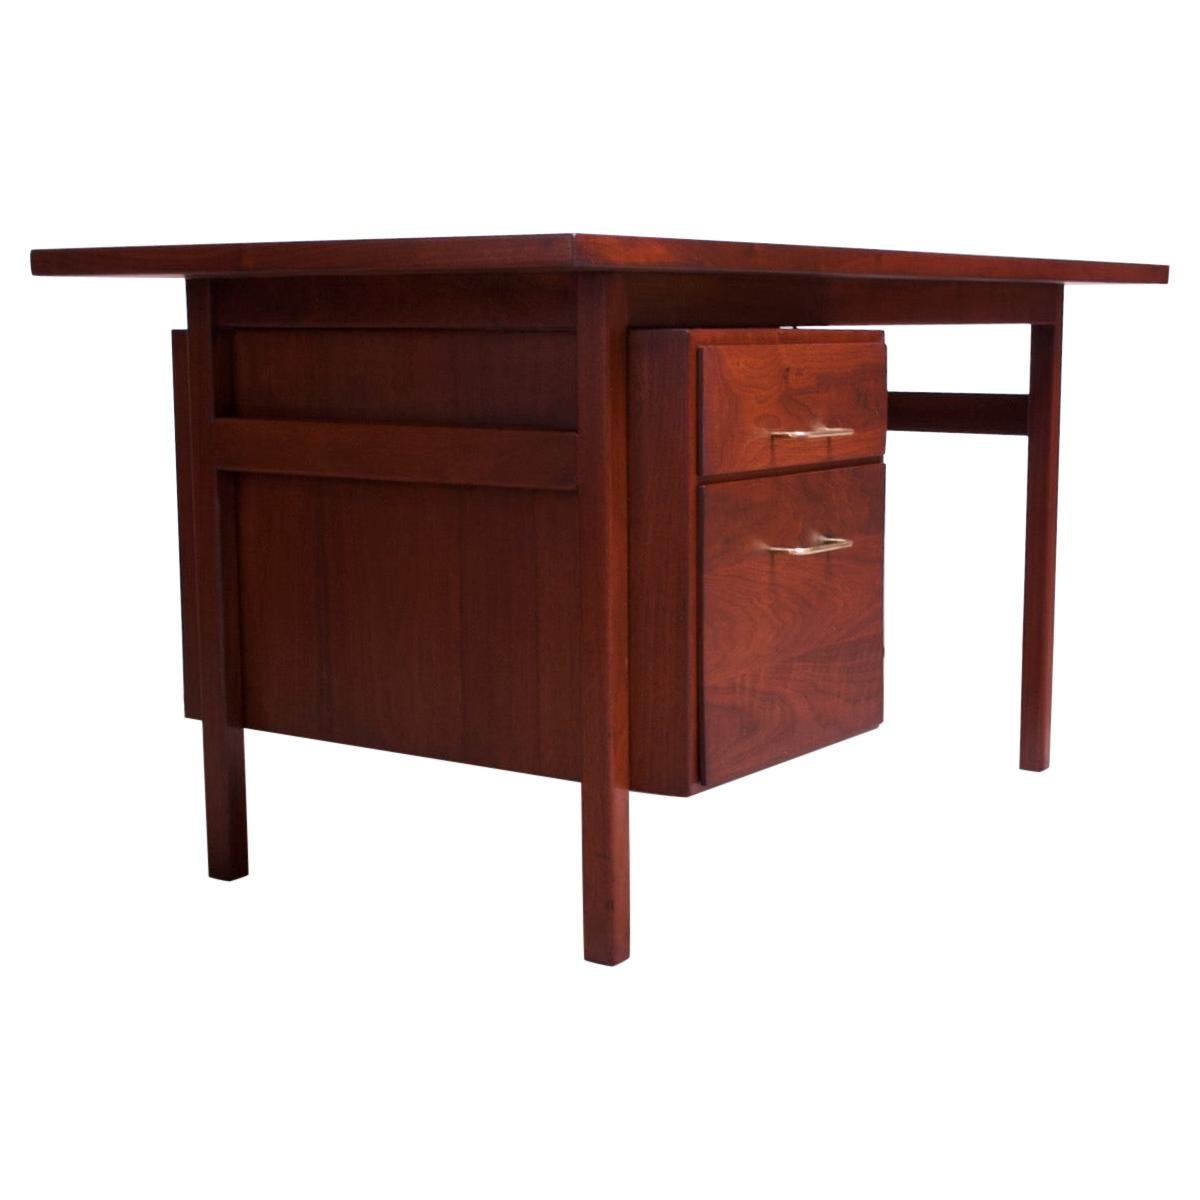 Midcentury American Modern Walnut Desk / Writing Table